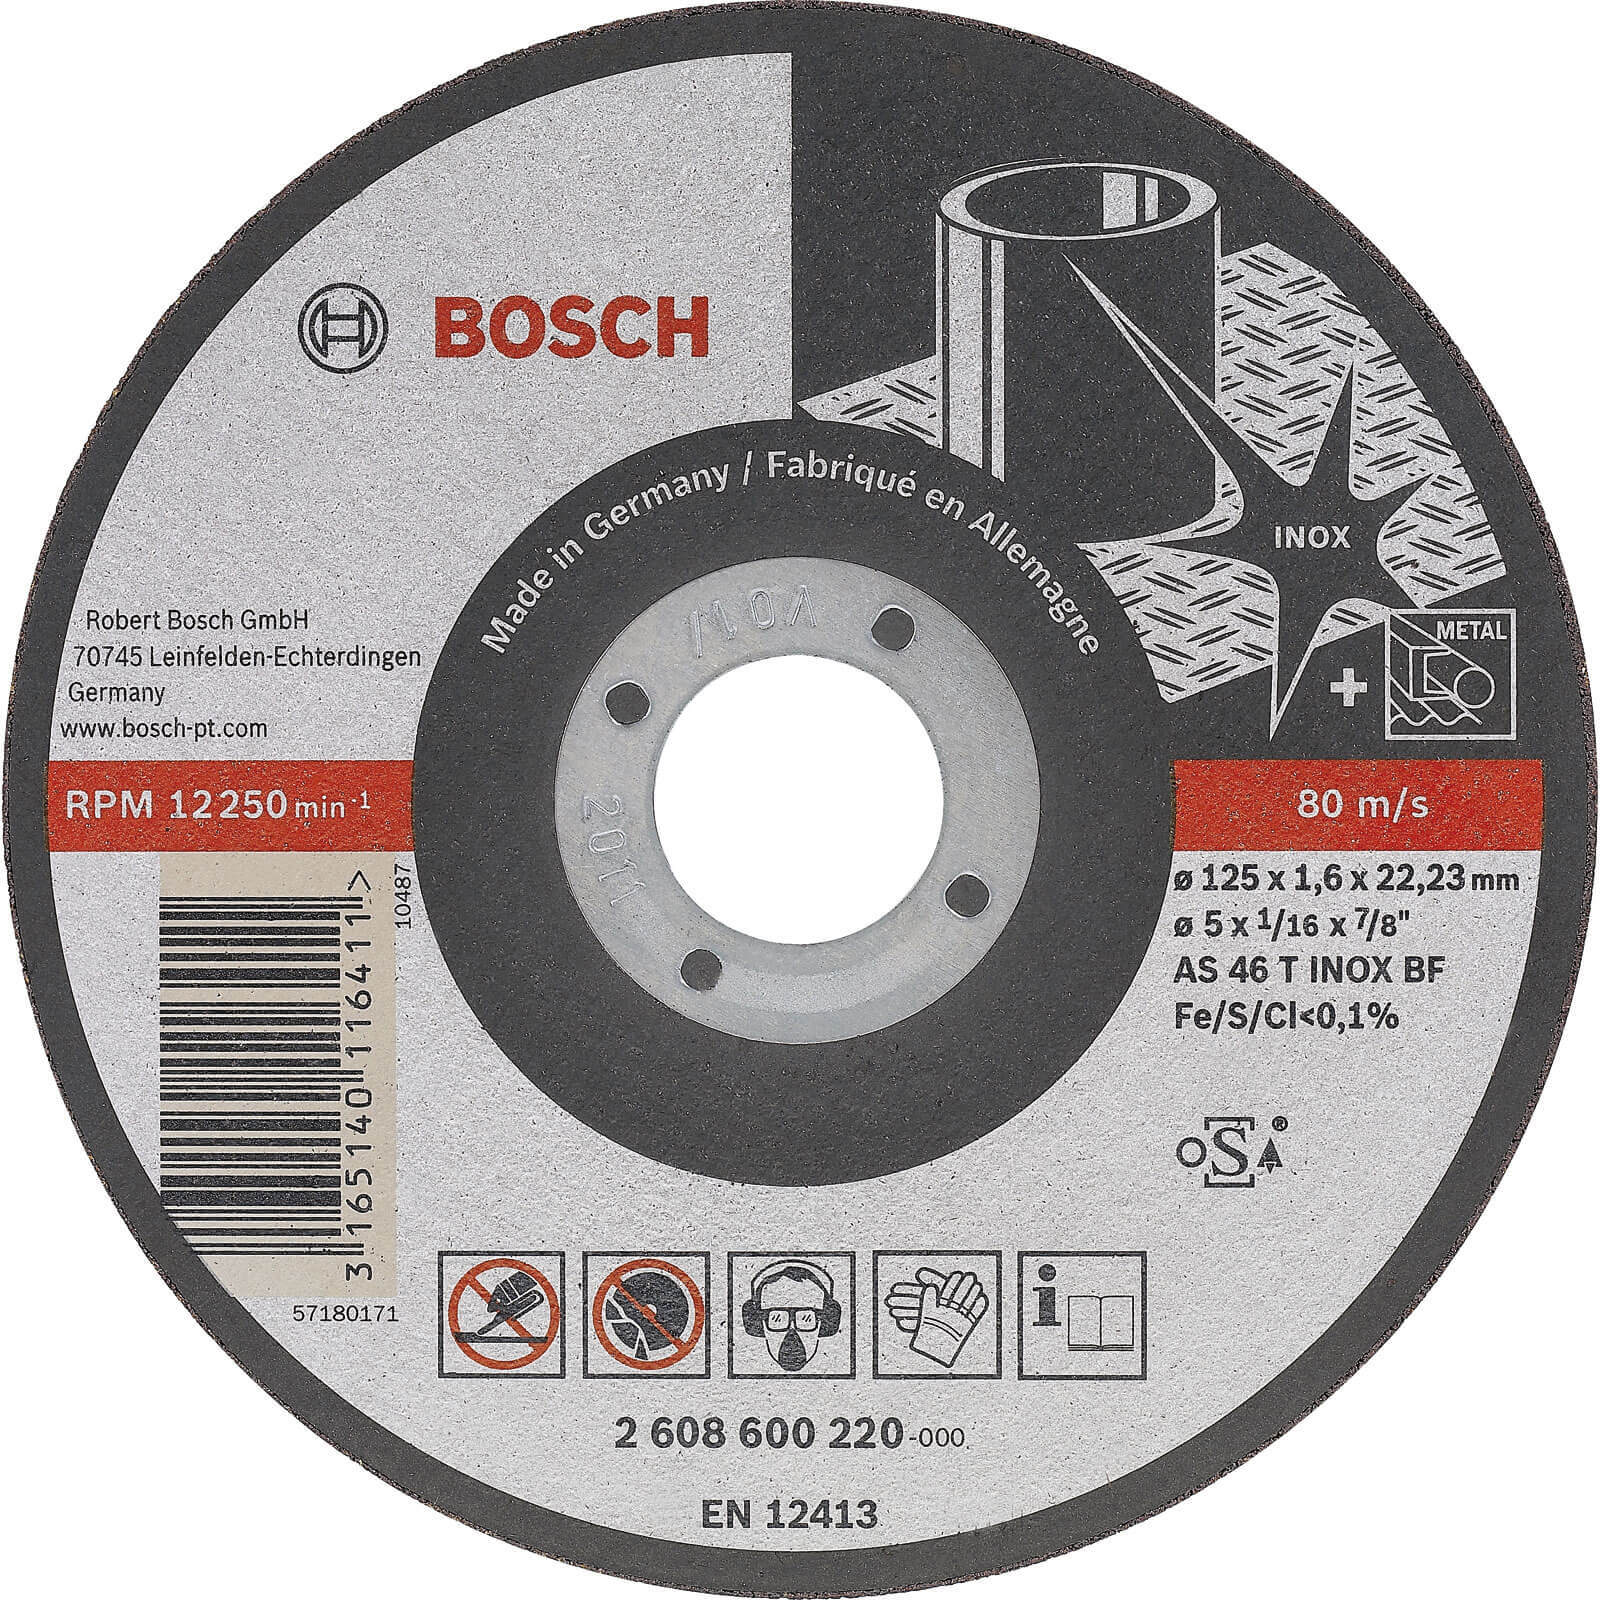 Bosch Rapido Best Inox Cutting Disc 115mm 1mm 22mm